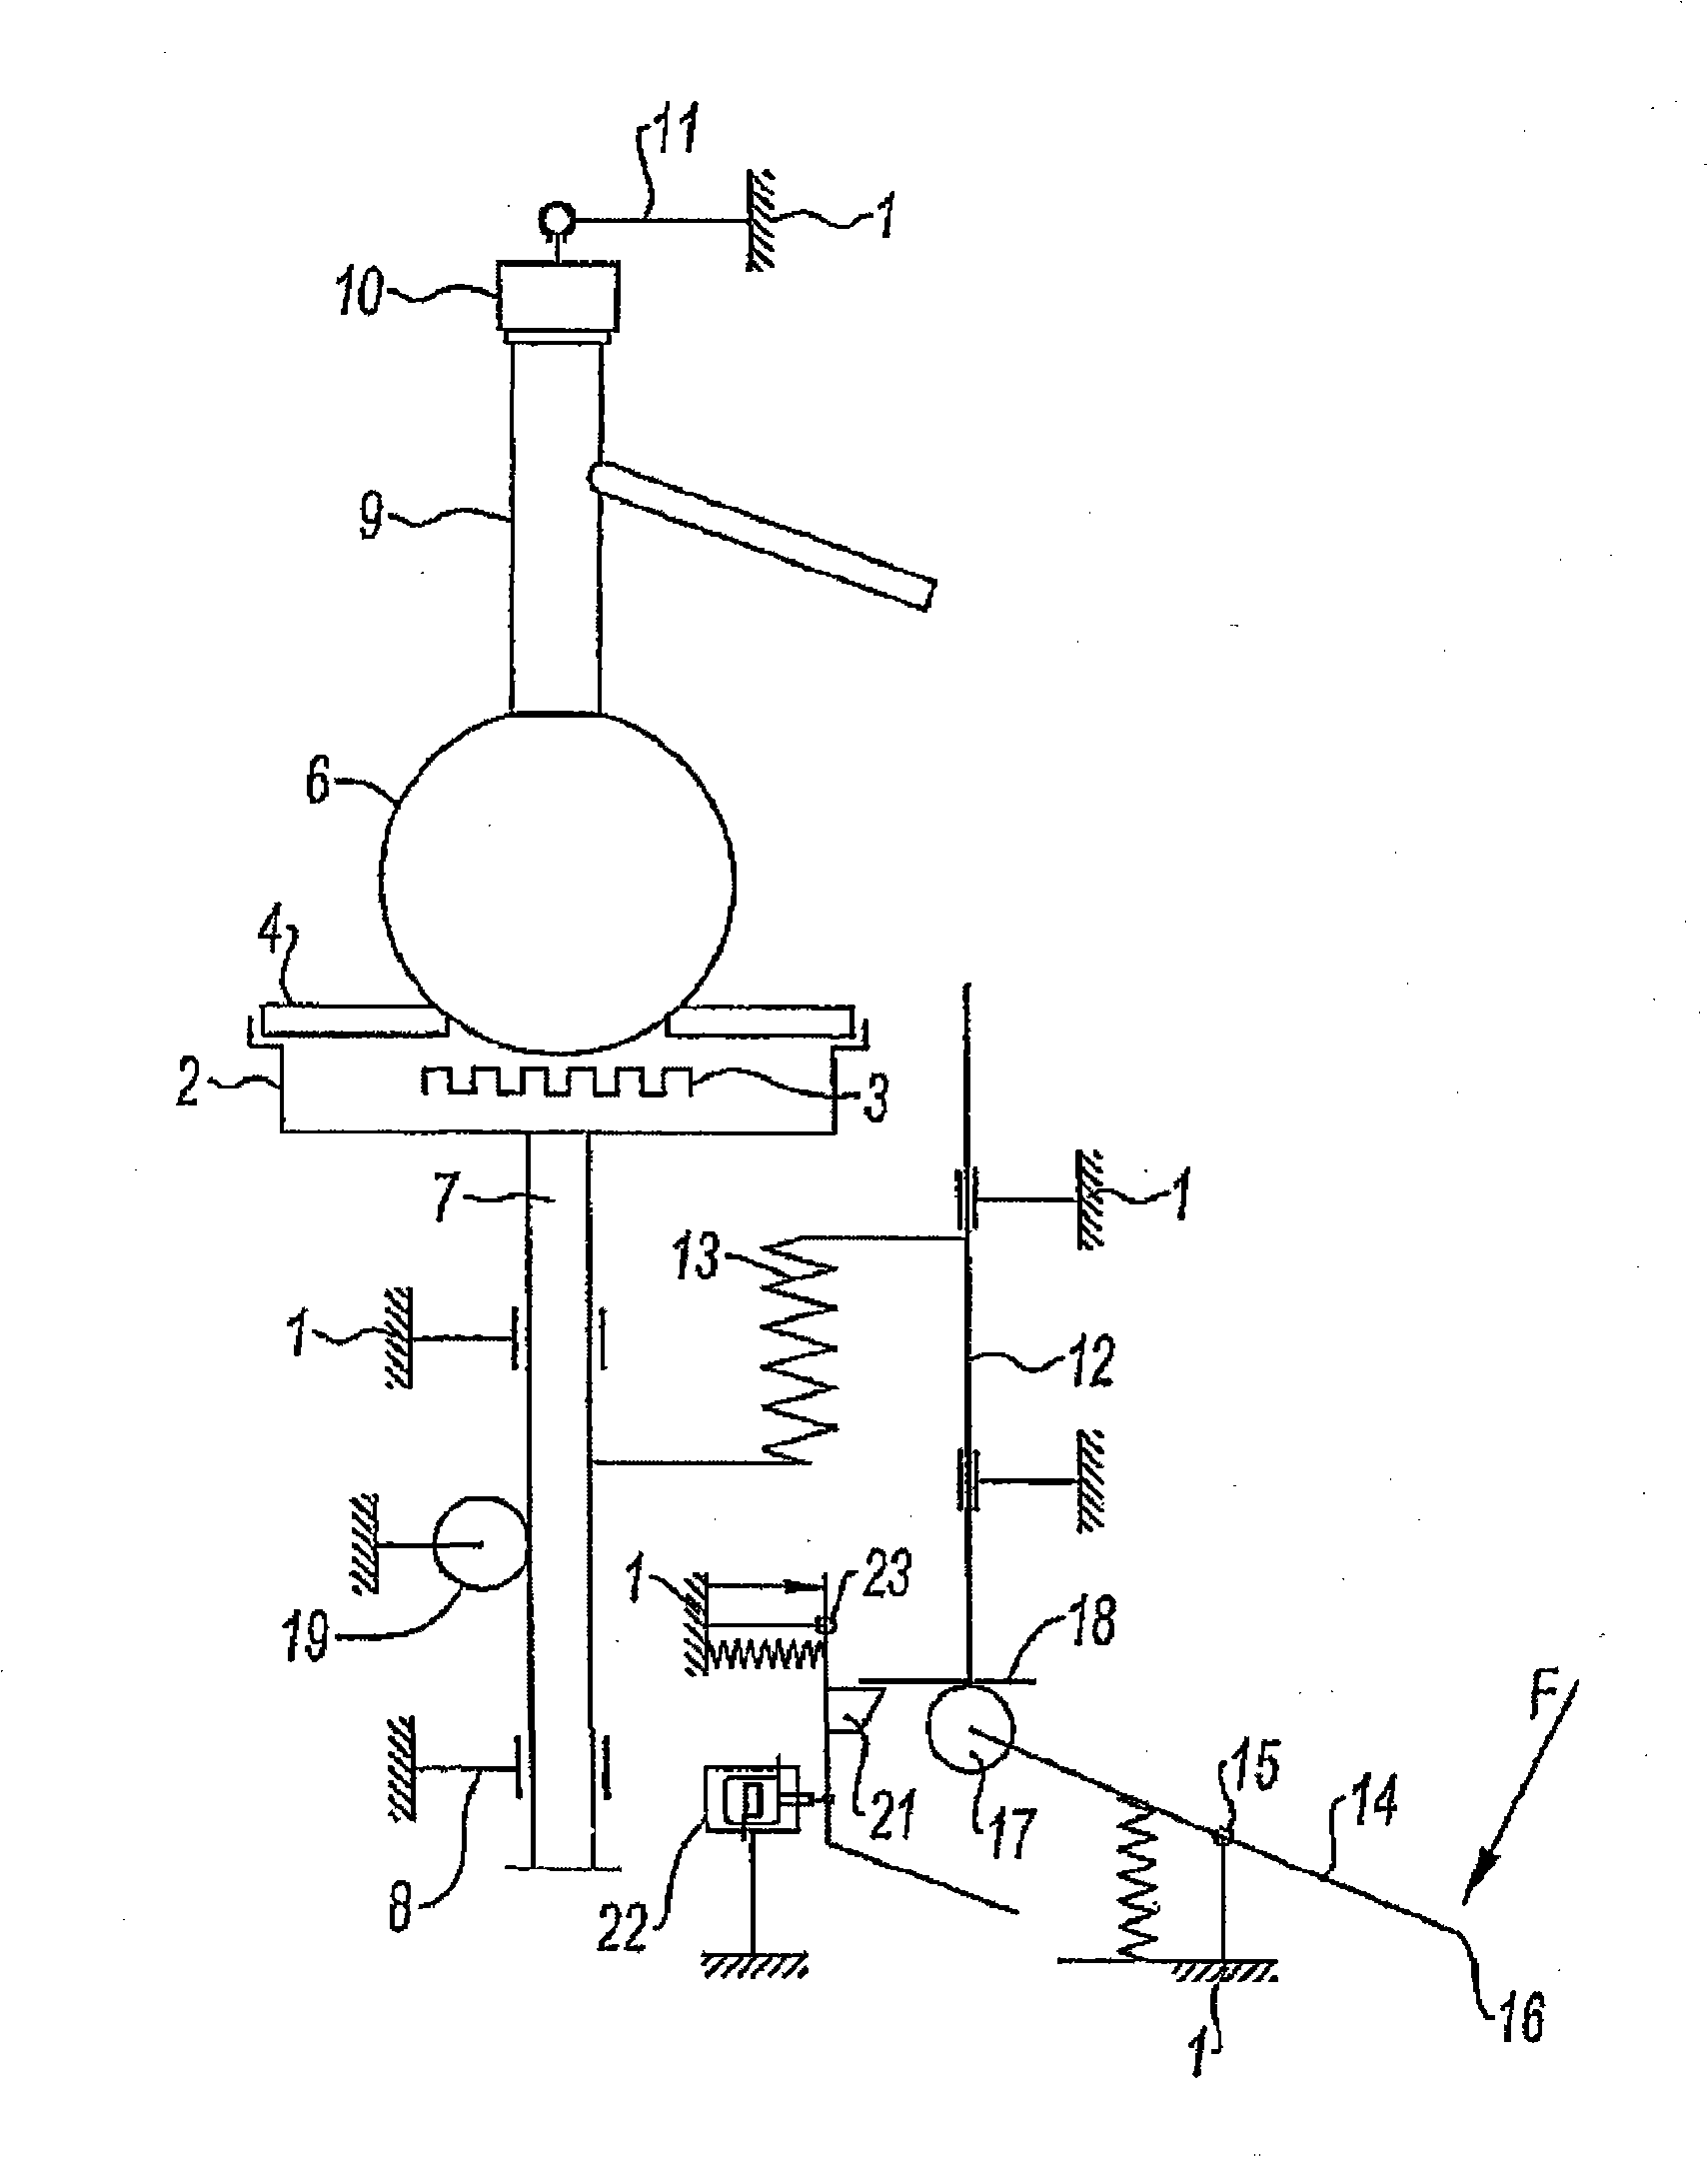 Device for heating globular distillation flask